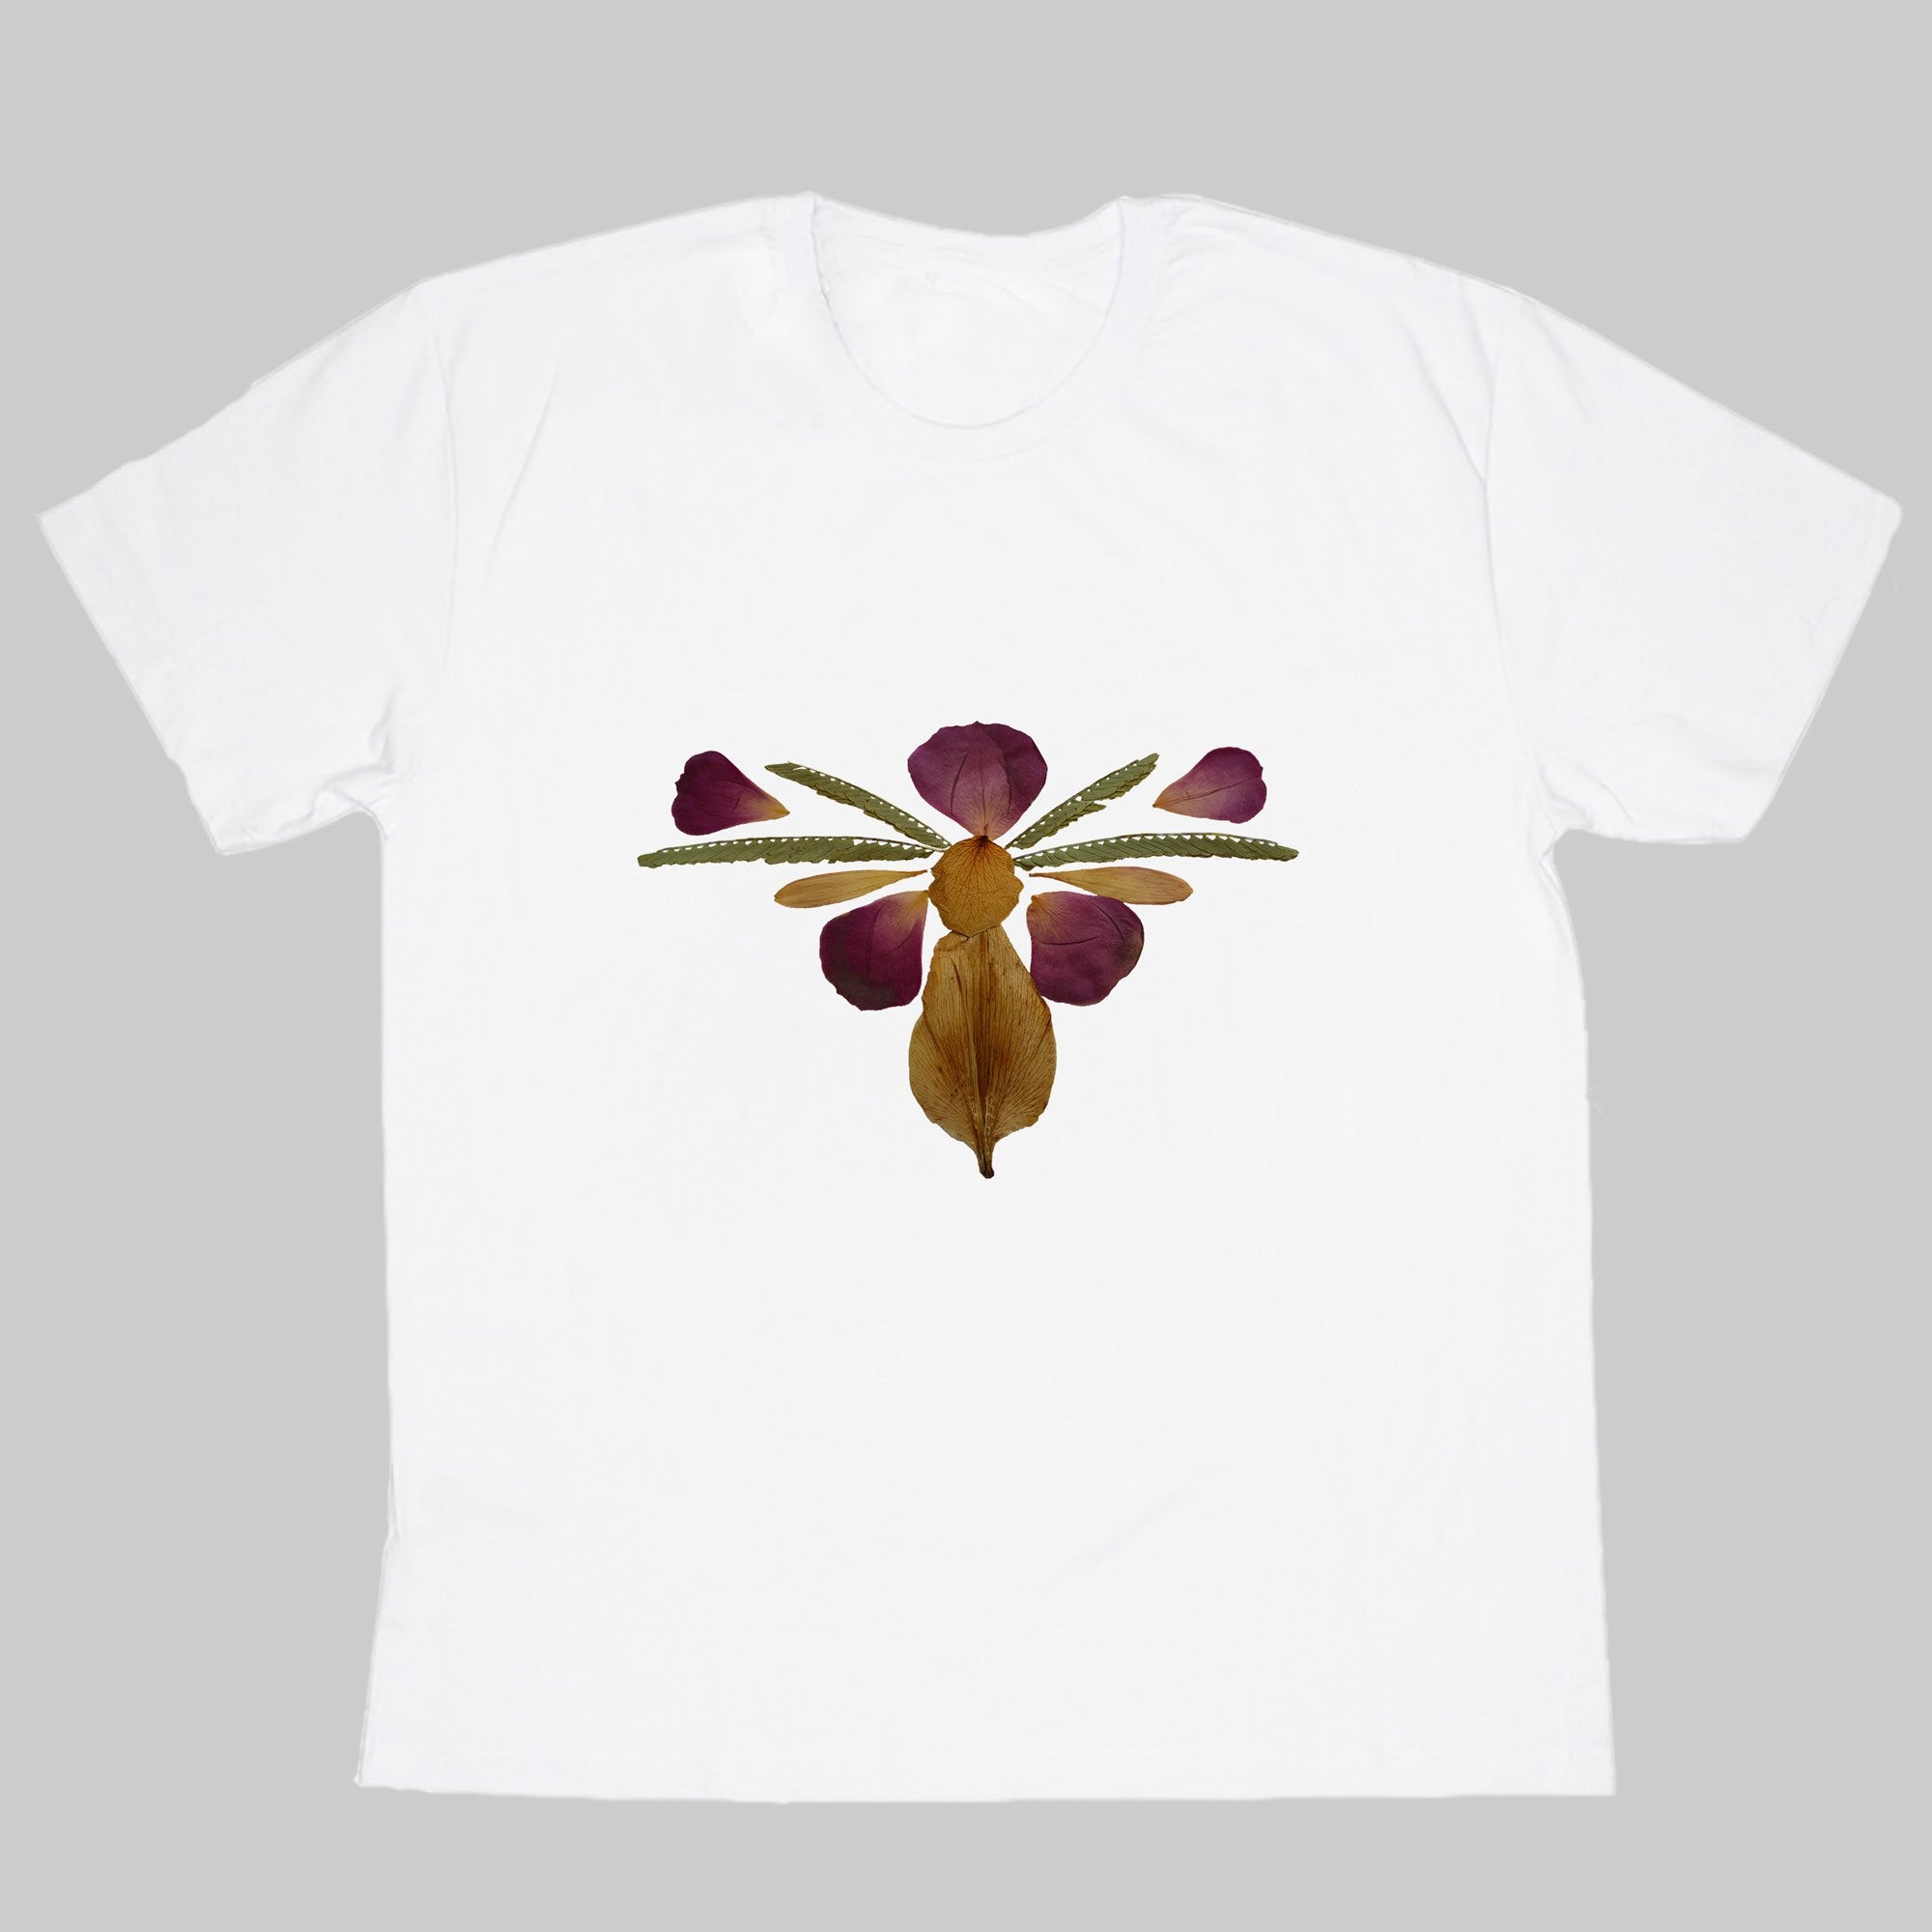 Butterfly-Like Ornament T-Shirt (Men's)